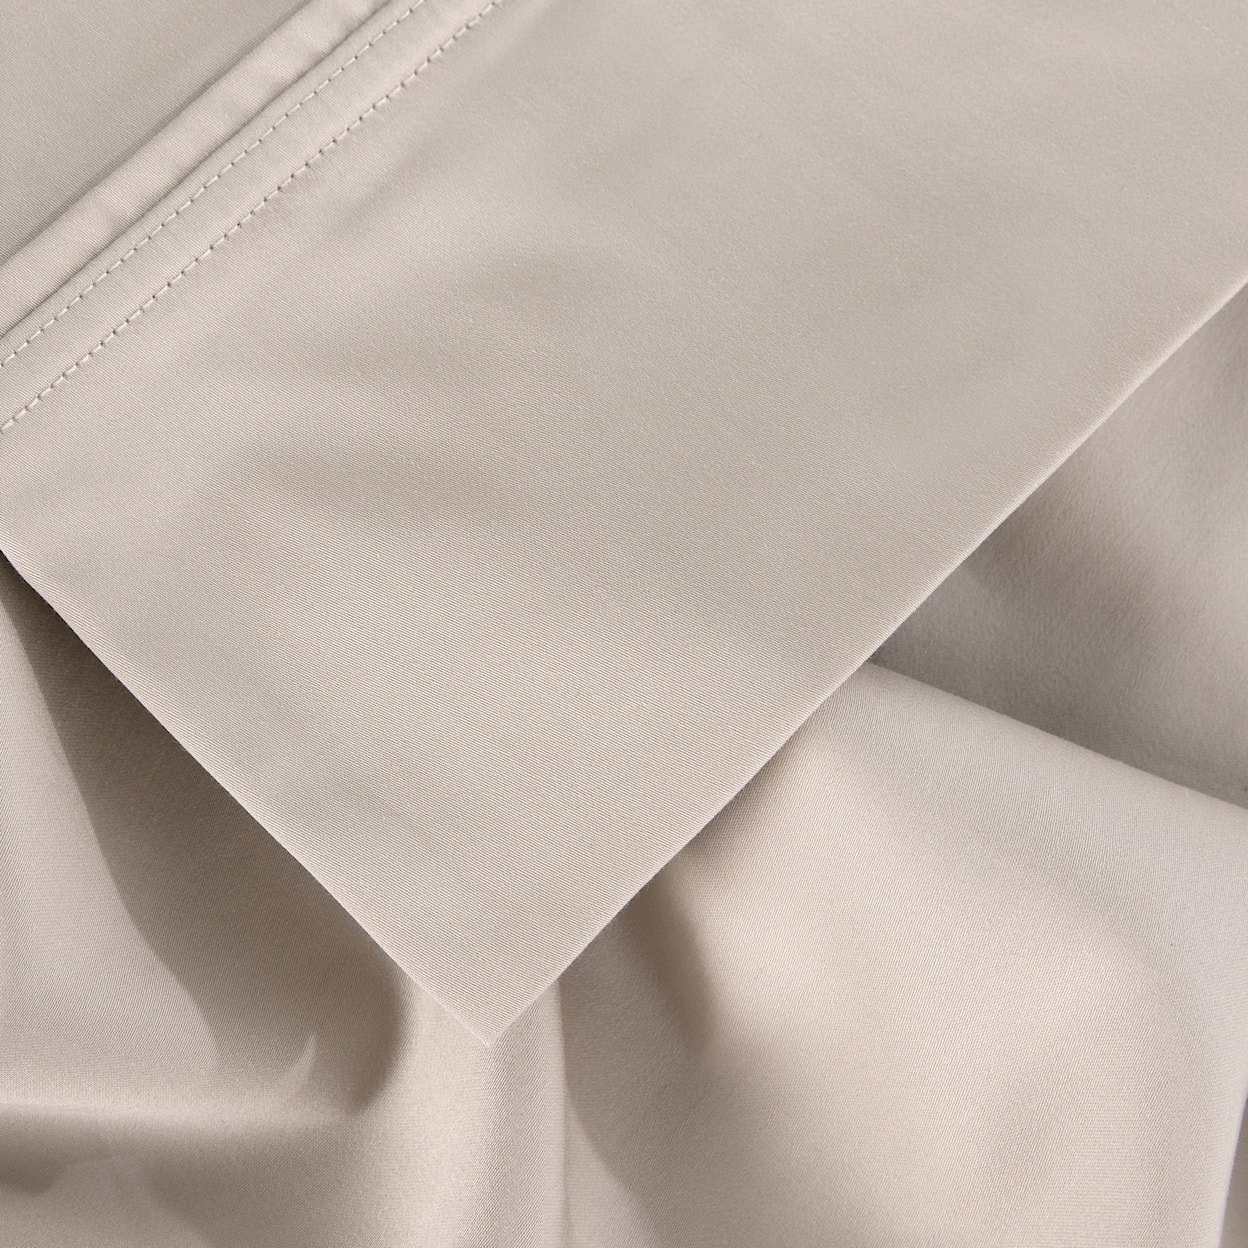 Bedgear Hyper Cotton Sheets Sheet Set, Beige, Full